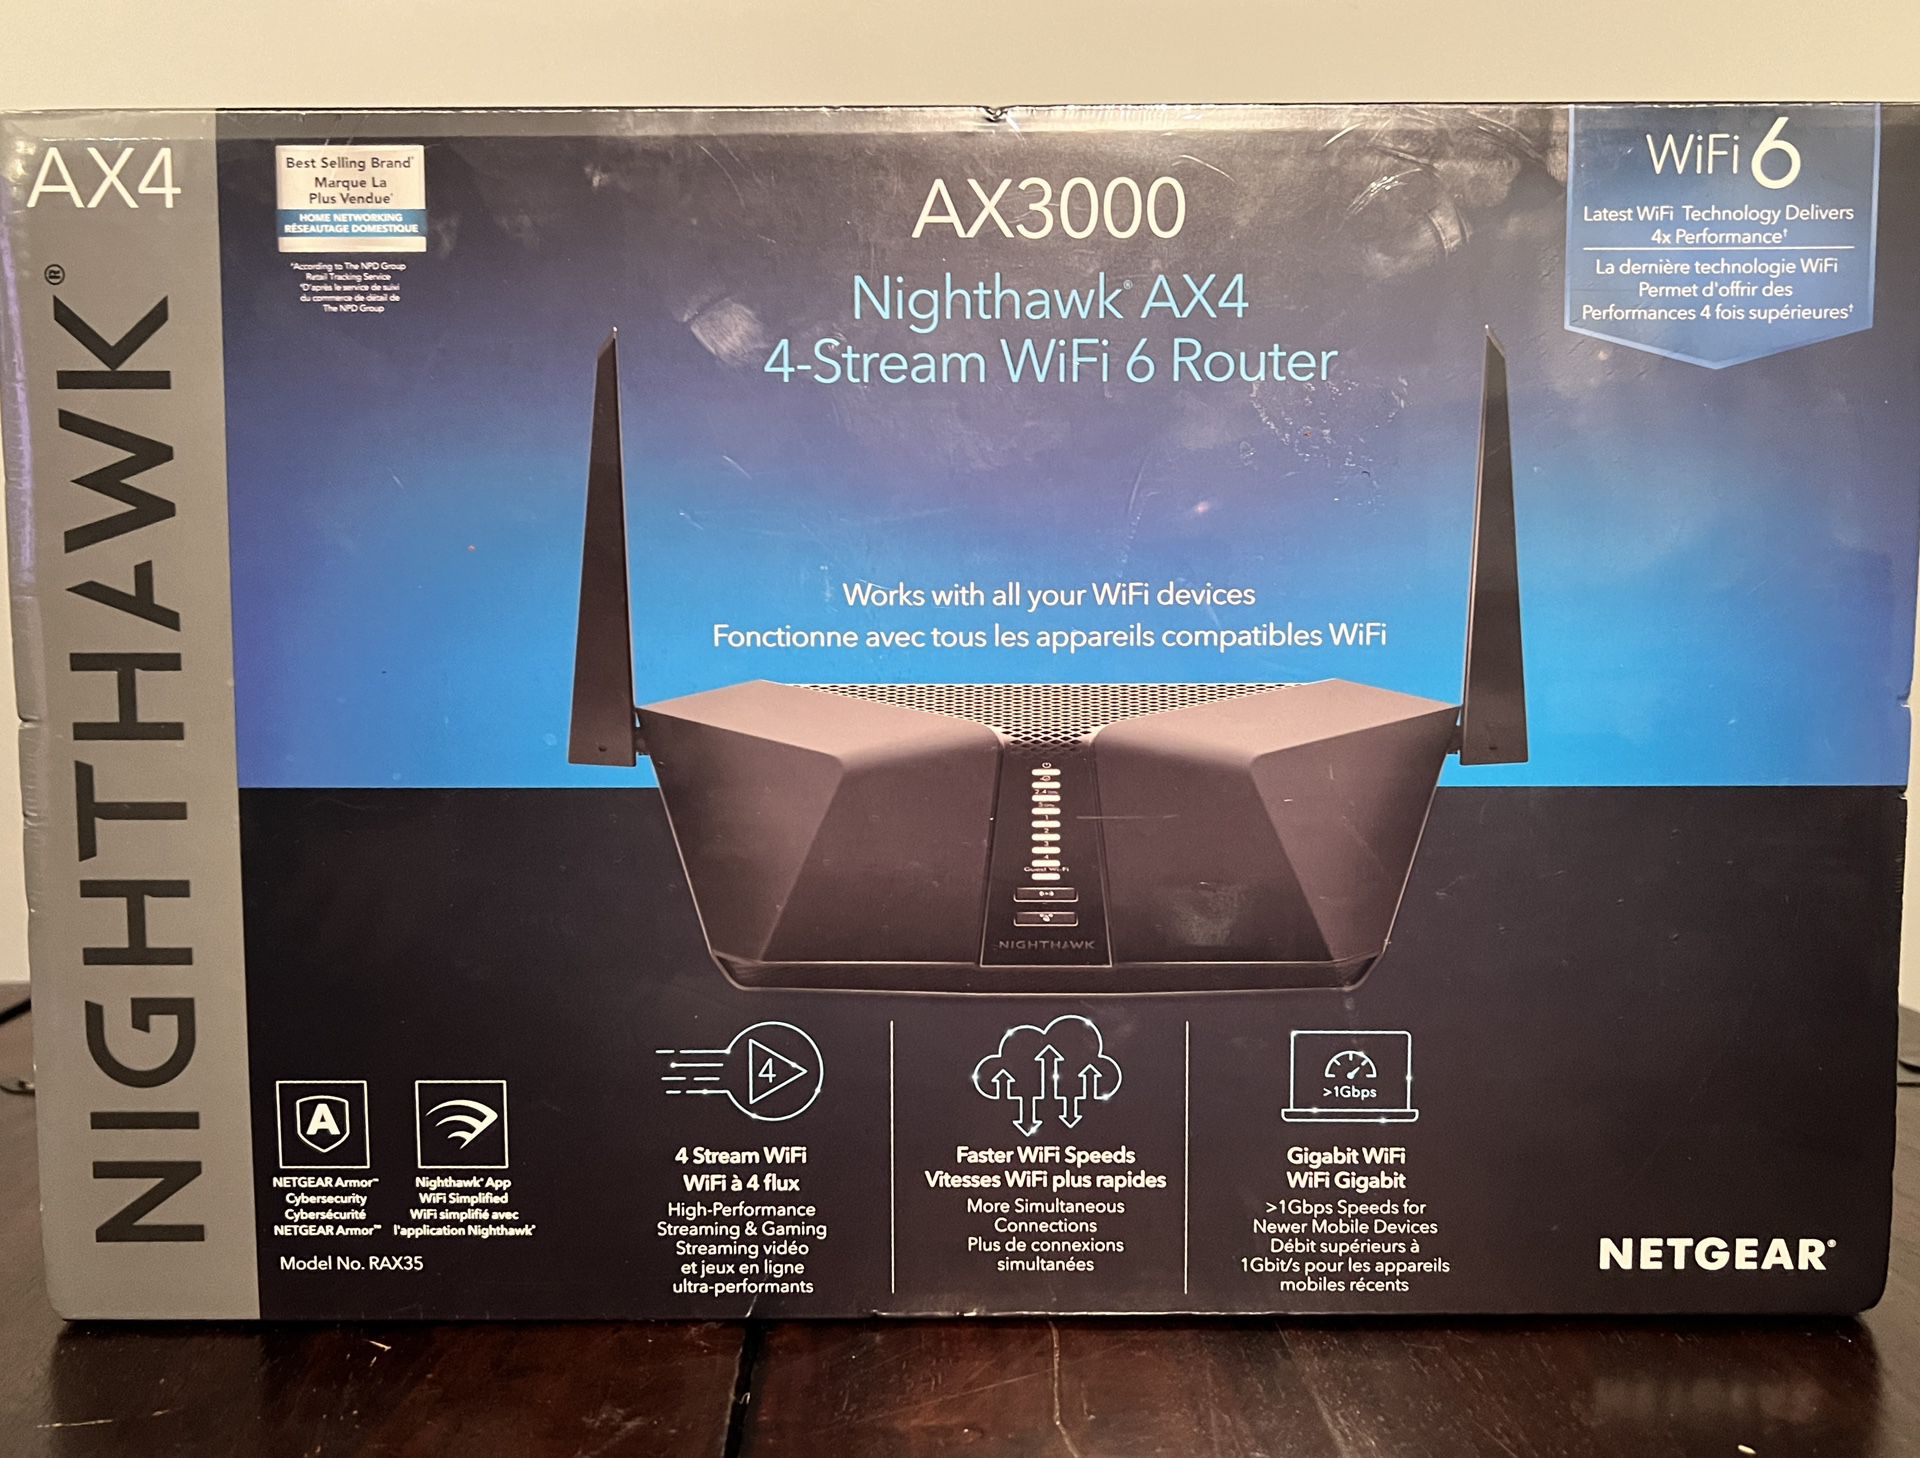 AX3000 Nighthawk AX4 4-Stream WiFi 6 Router